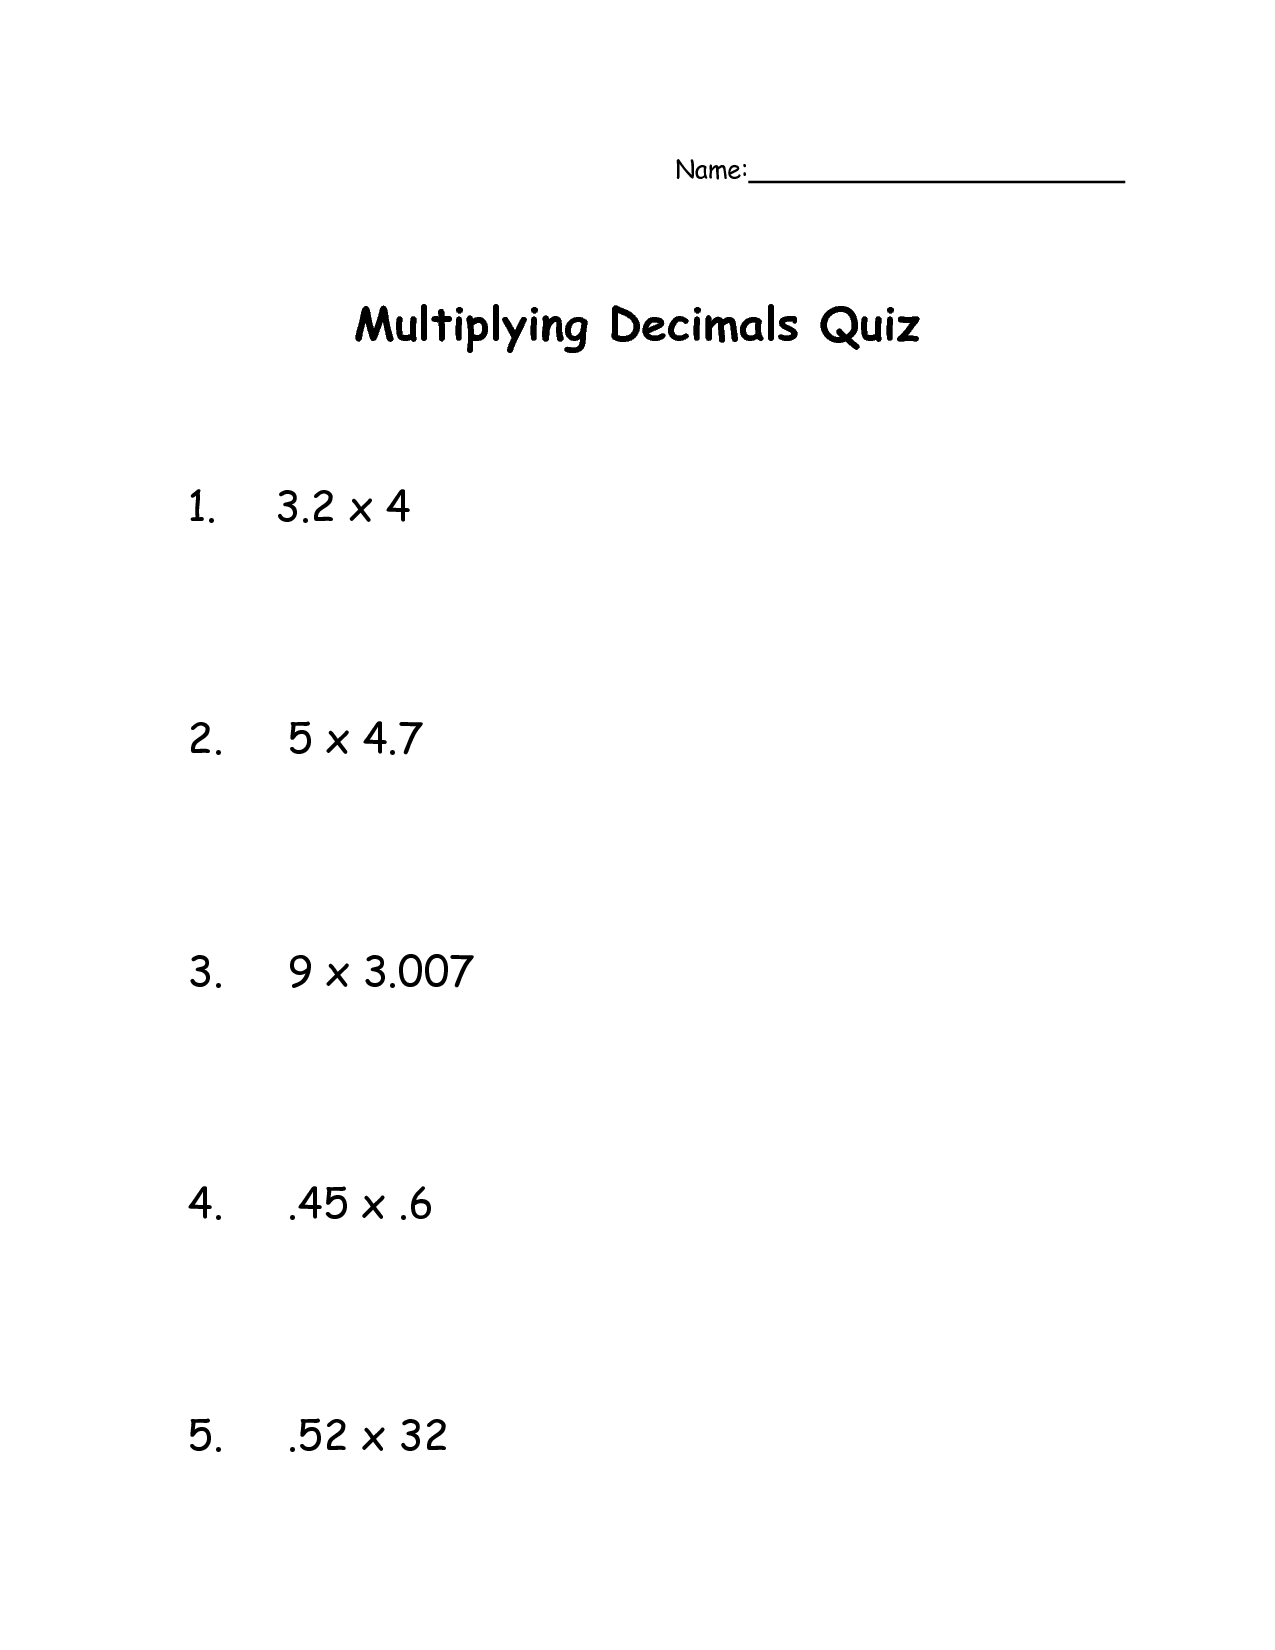 Multiplying Decimals Worksheets 7th Grade Image